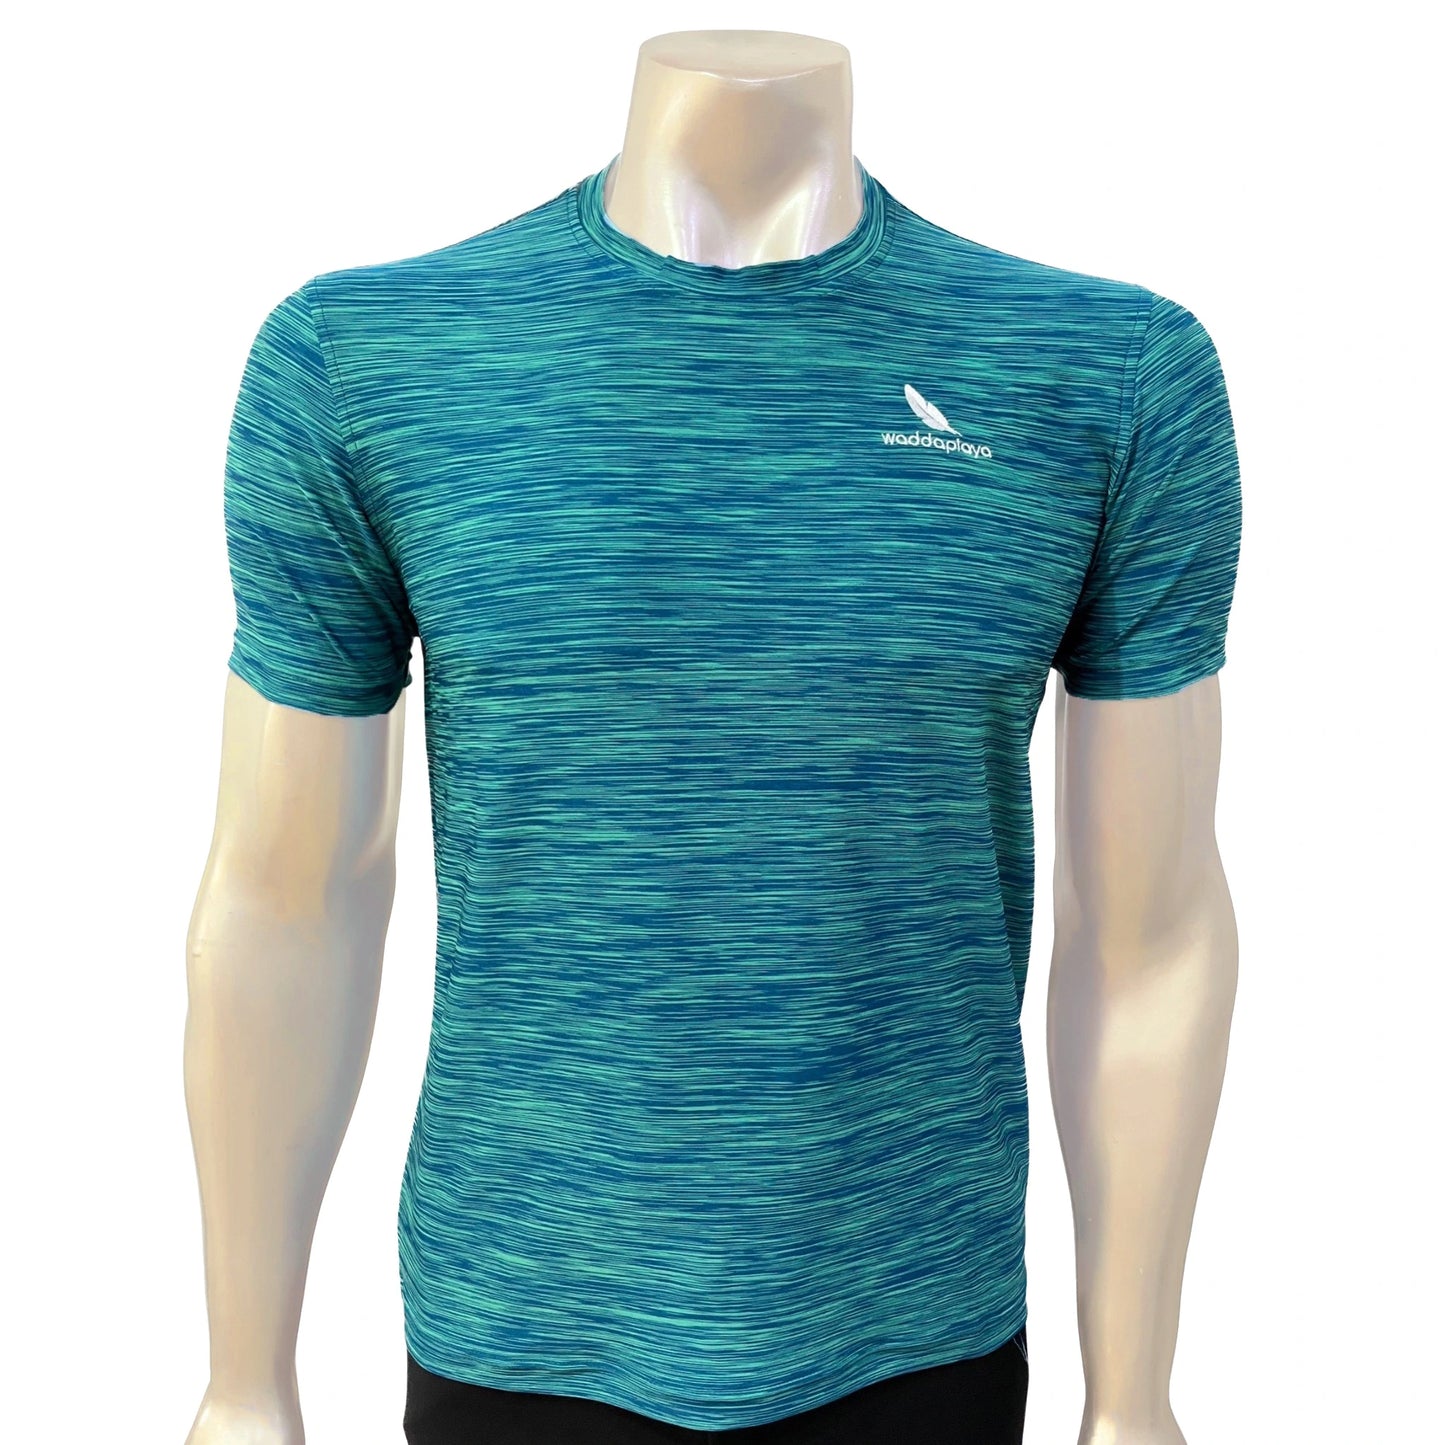 Play & Practice Shirt - Aquamarine